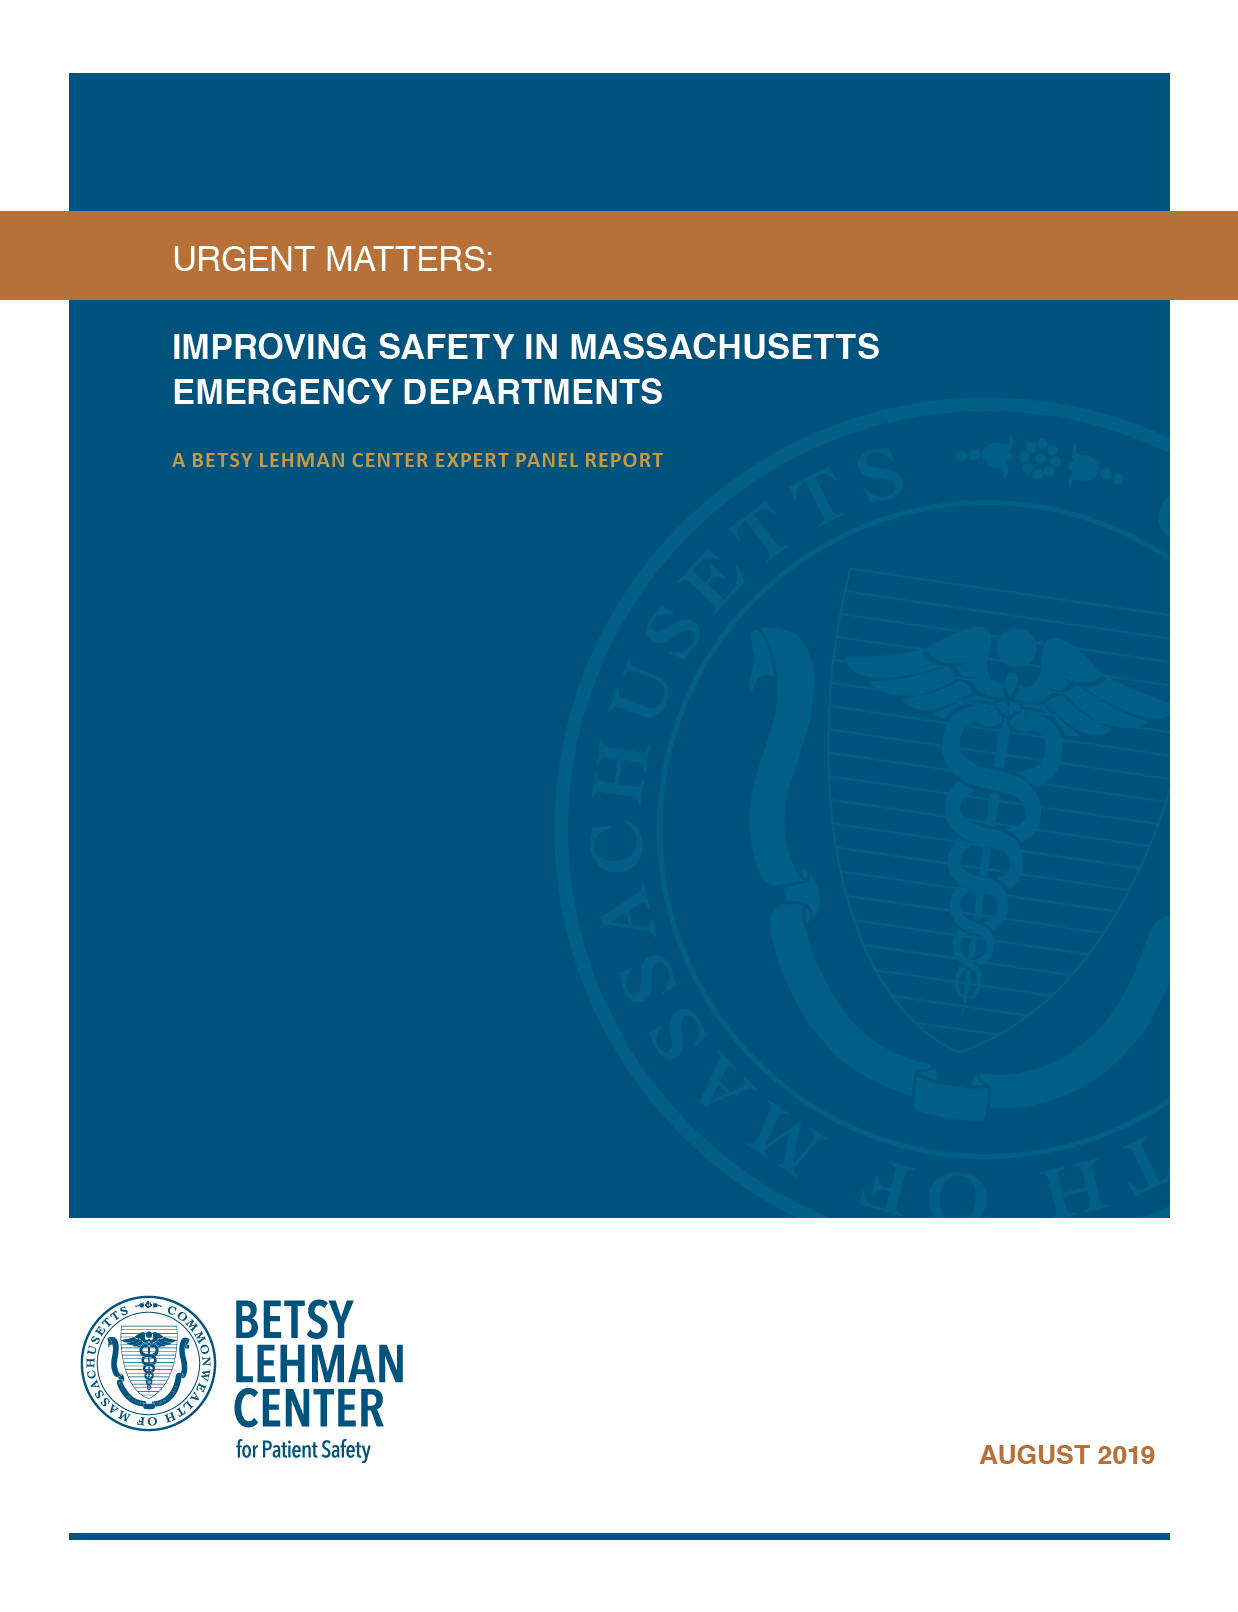 Urgent Matters Report Cover